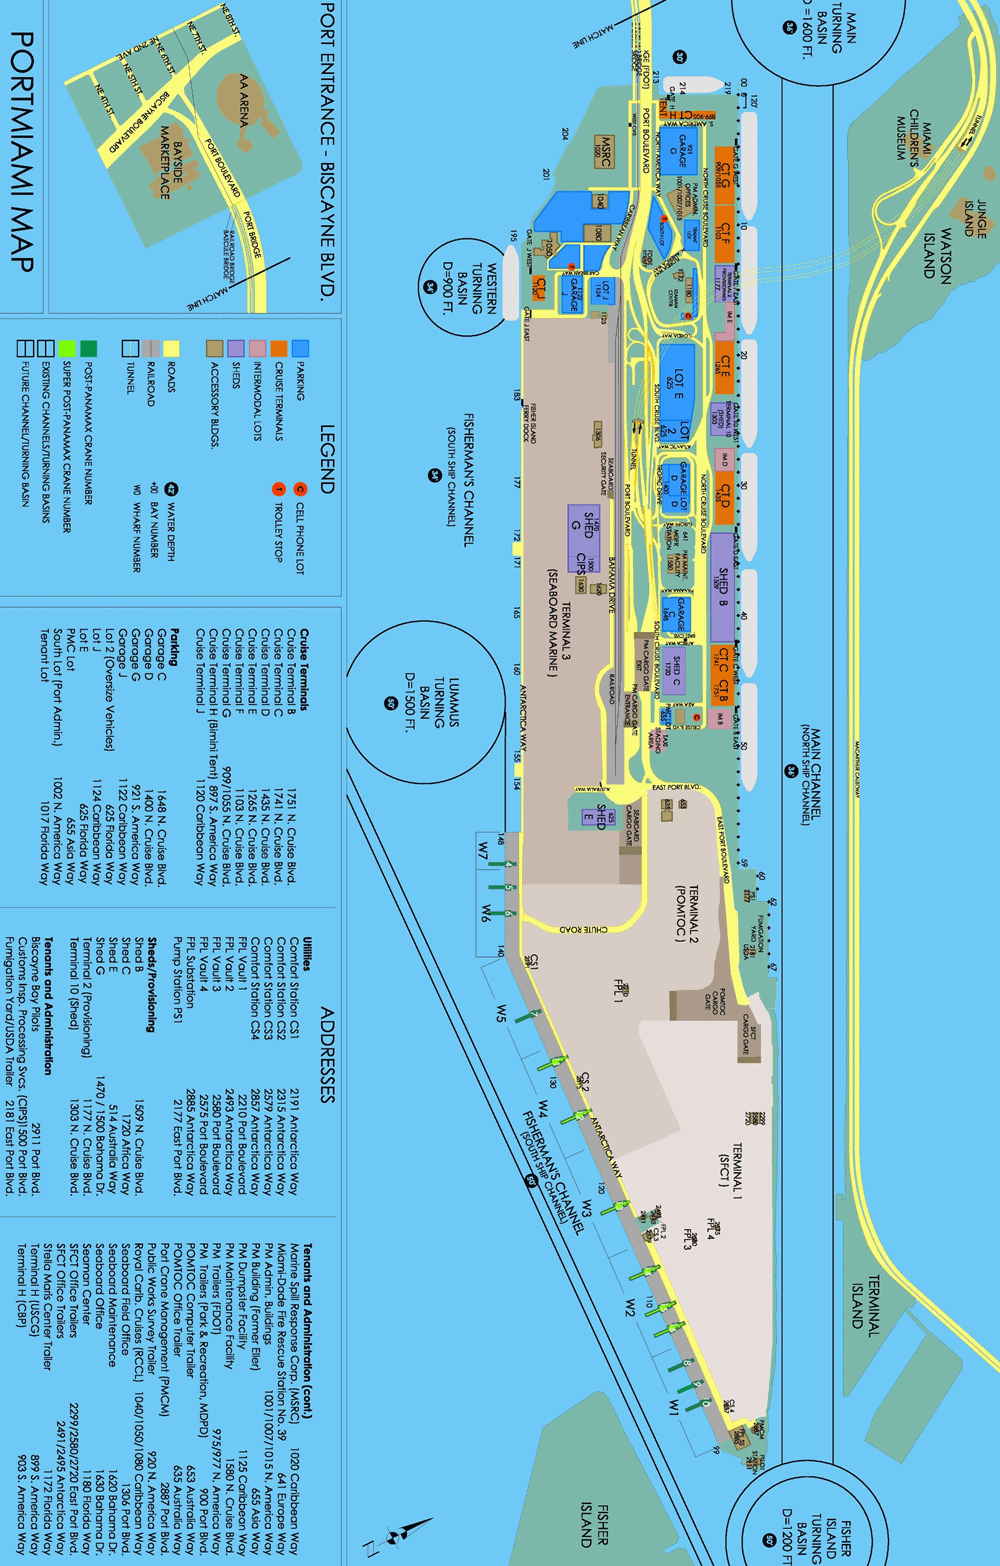 address of miami cruise port